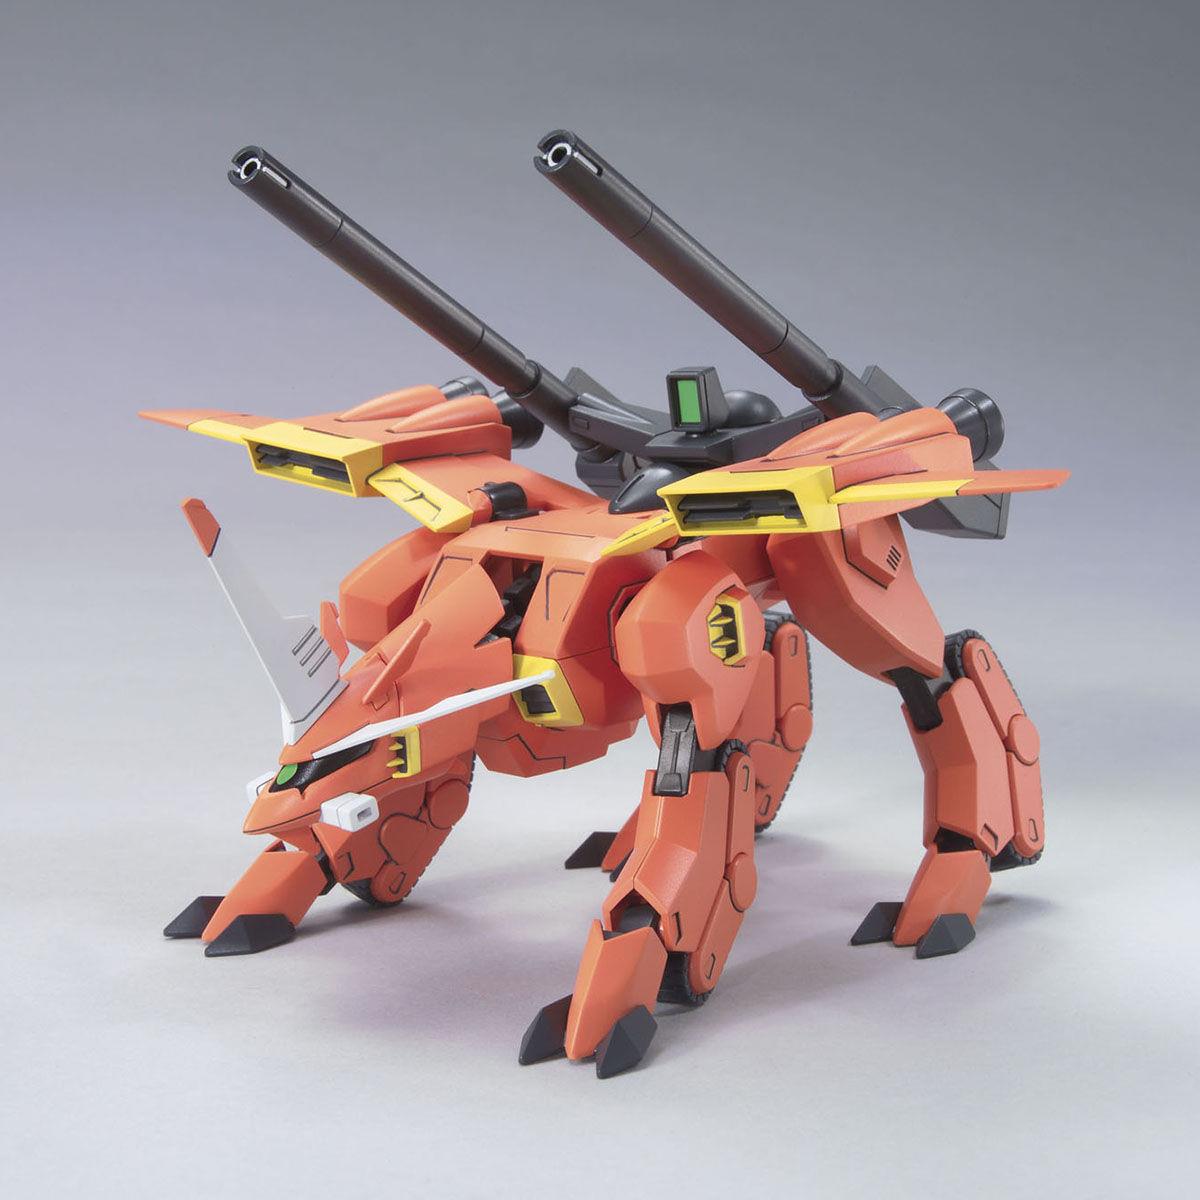 Gundam Seed: Lagowe HG Model